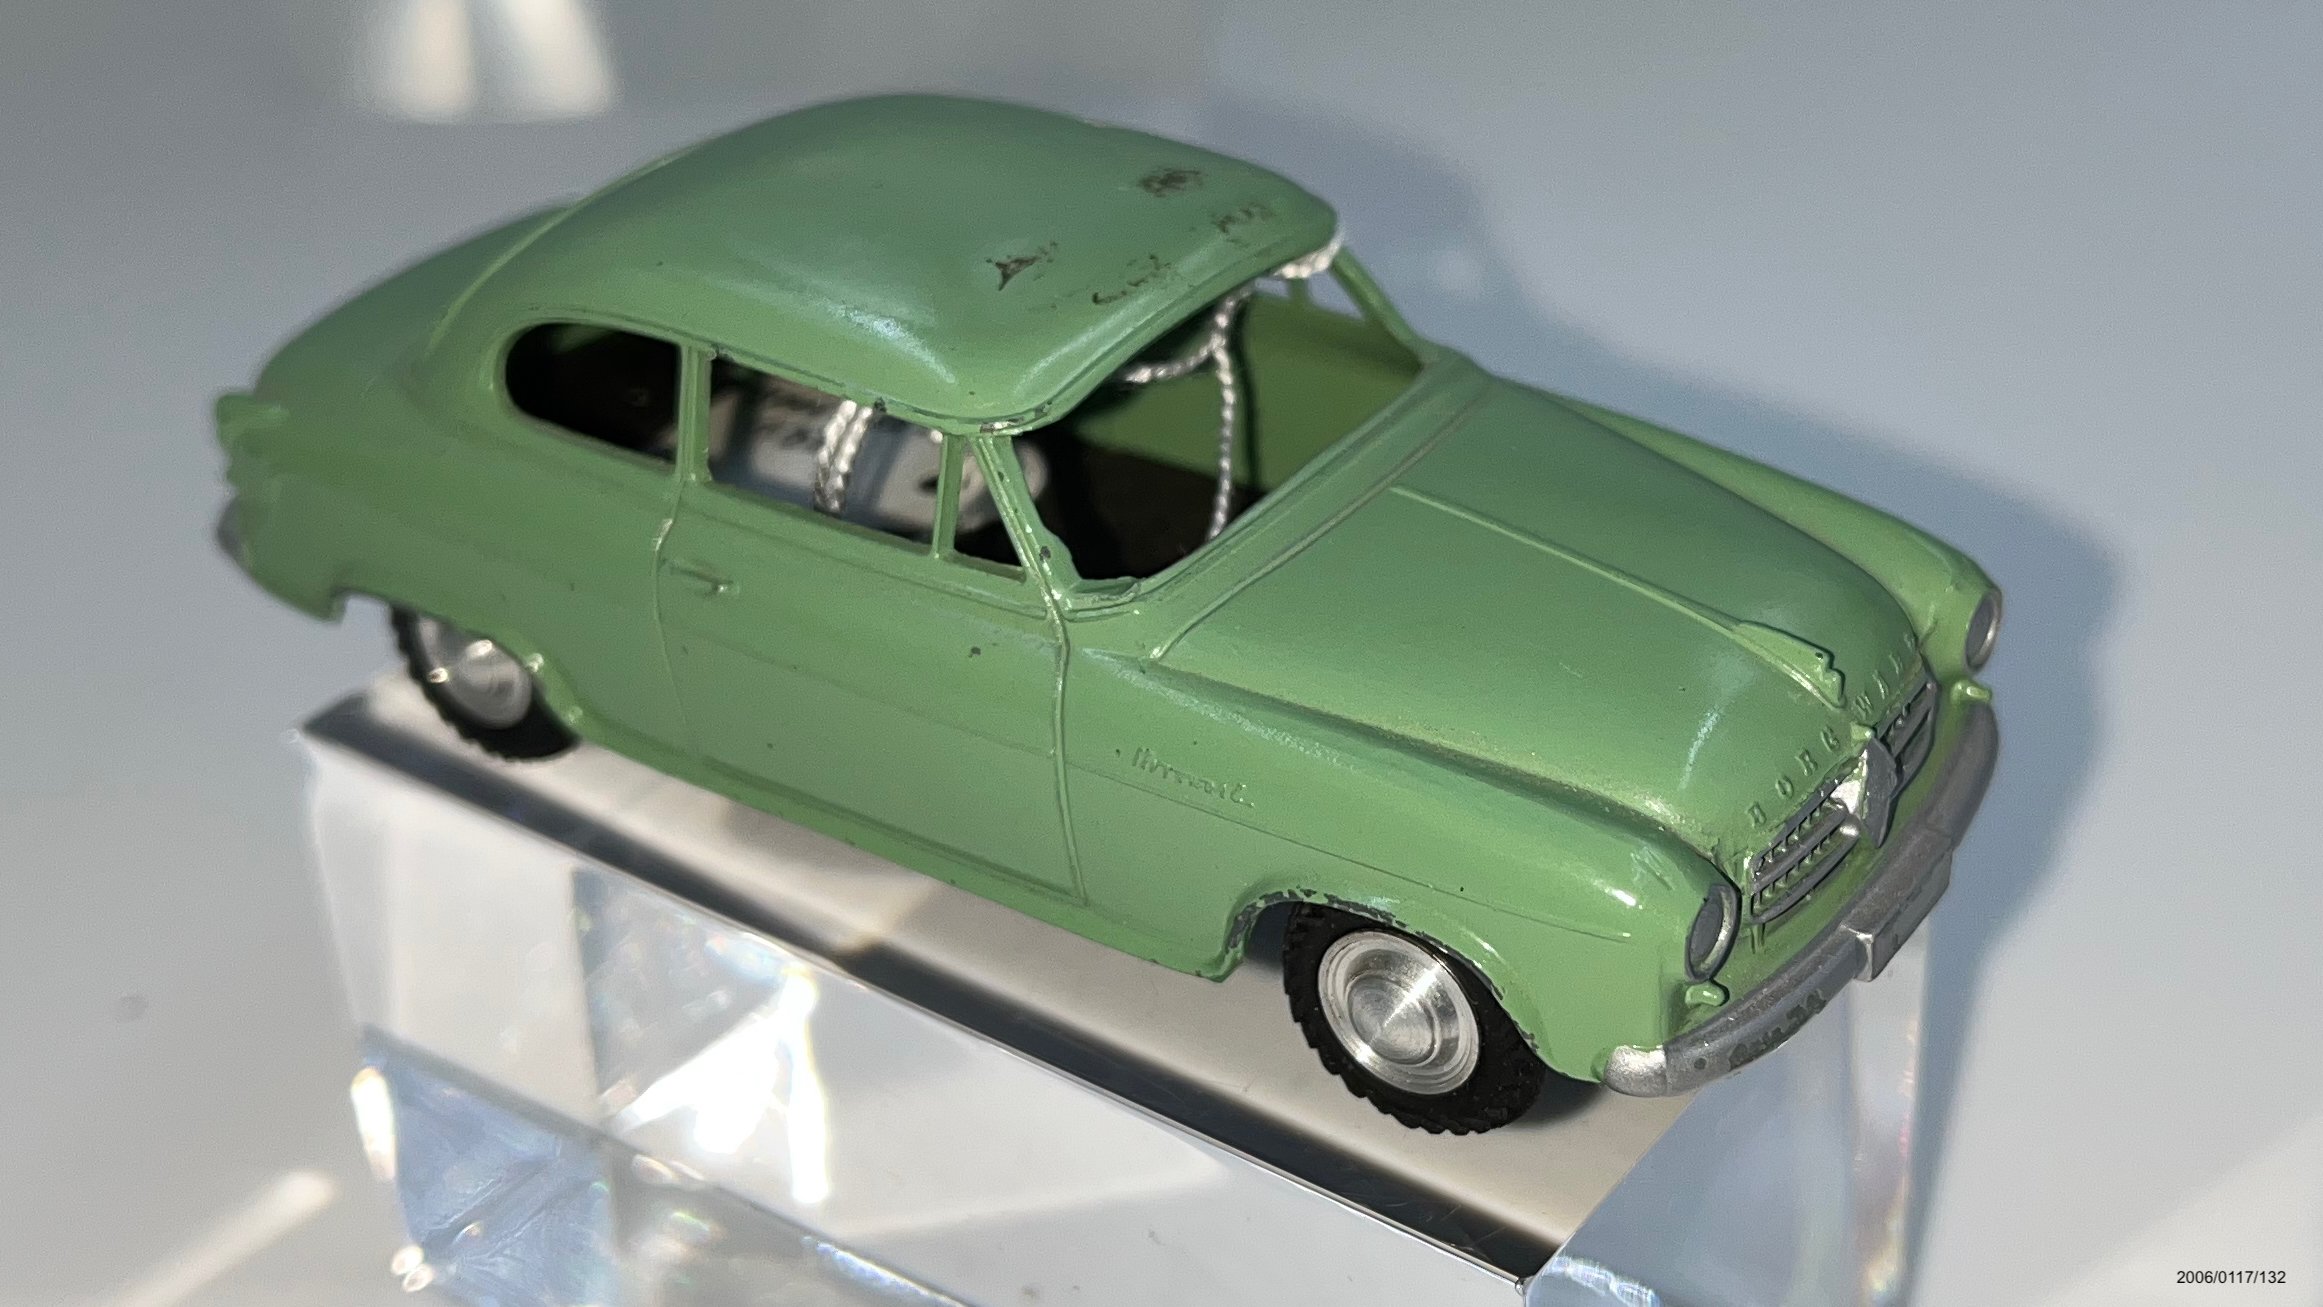 Modellauto mit Verpackung: Ansicht des Modells (Museumsgesellschaft Bad Dürkheim e. V. CC BY-NC-SA)